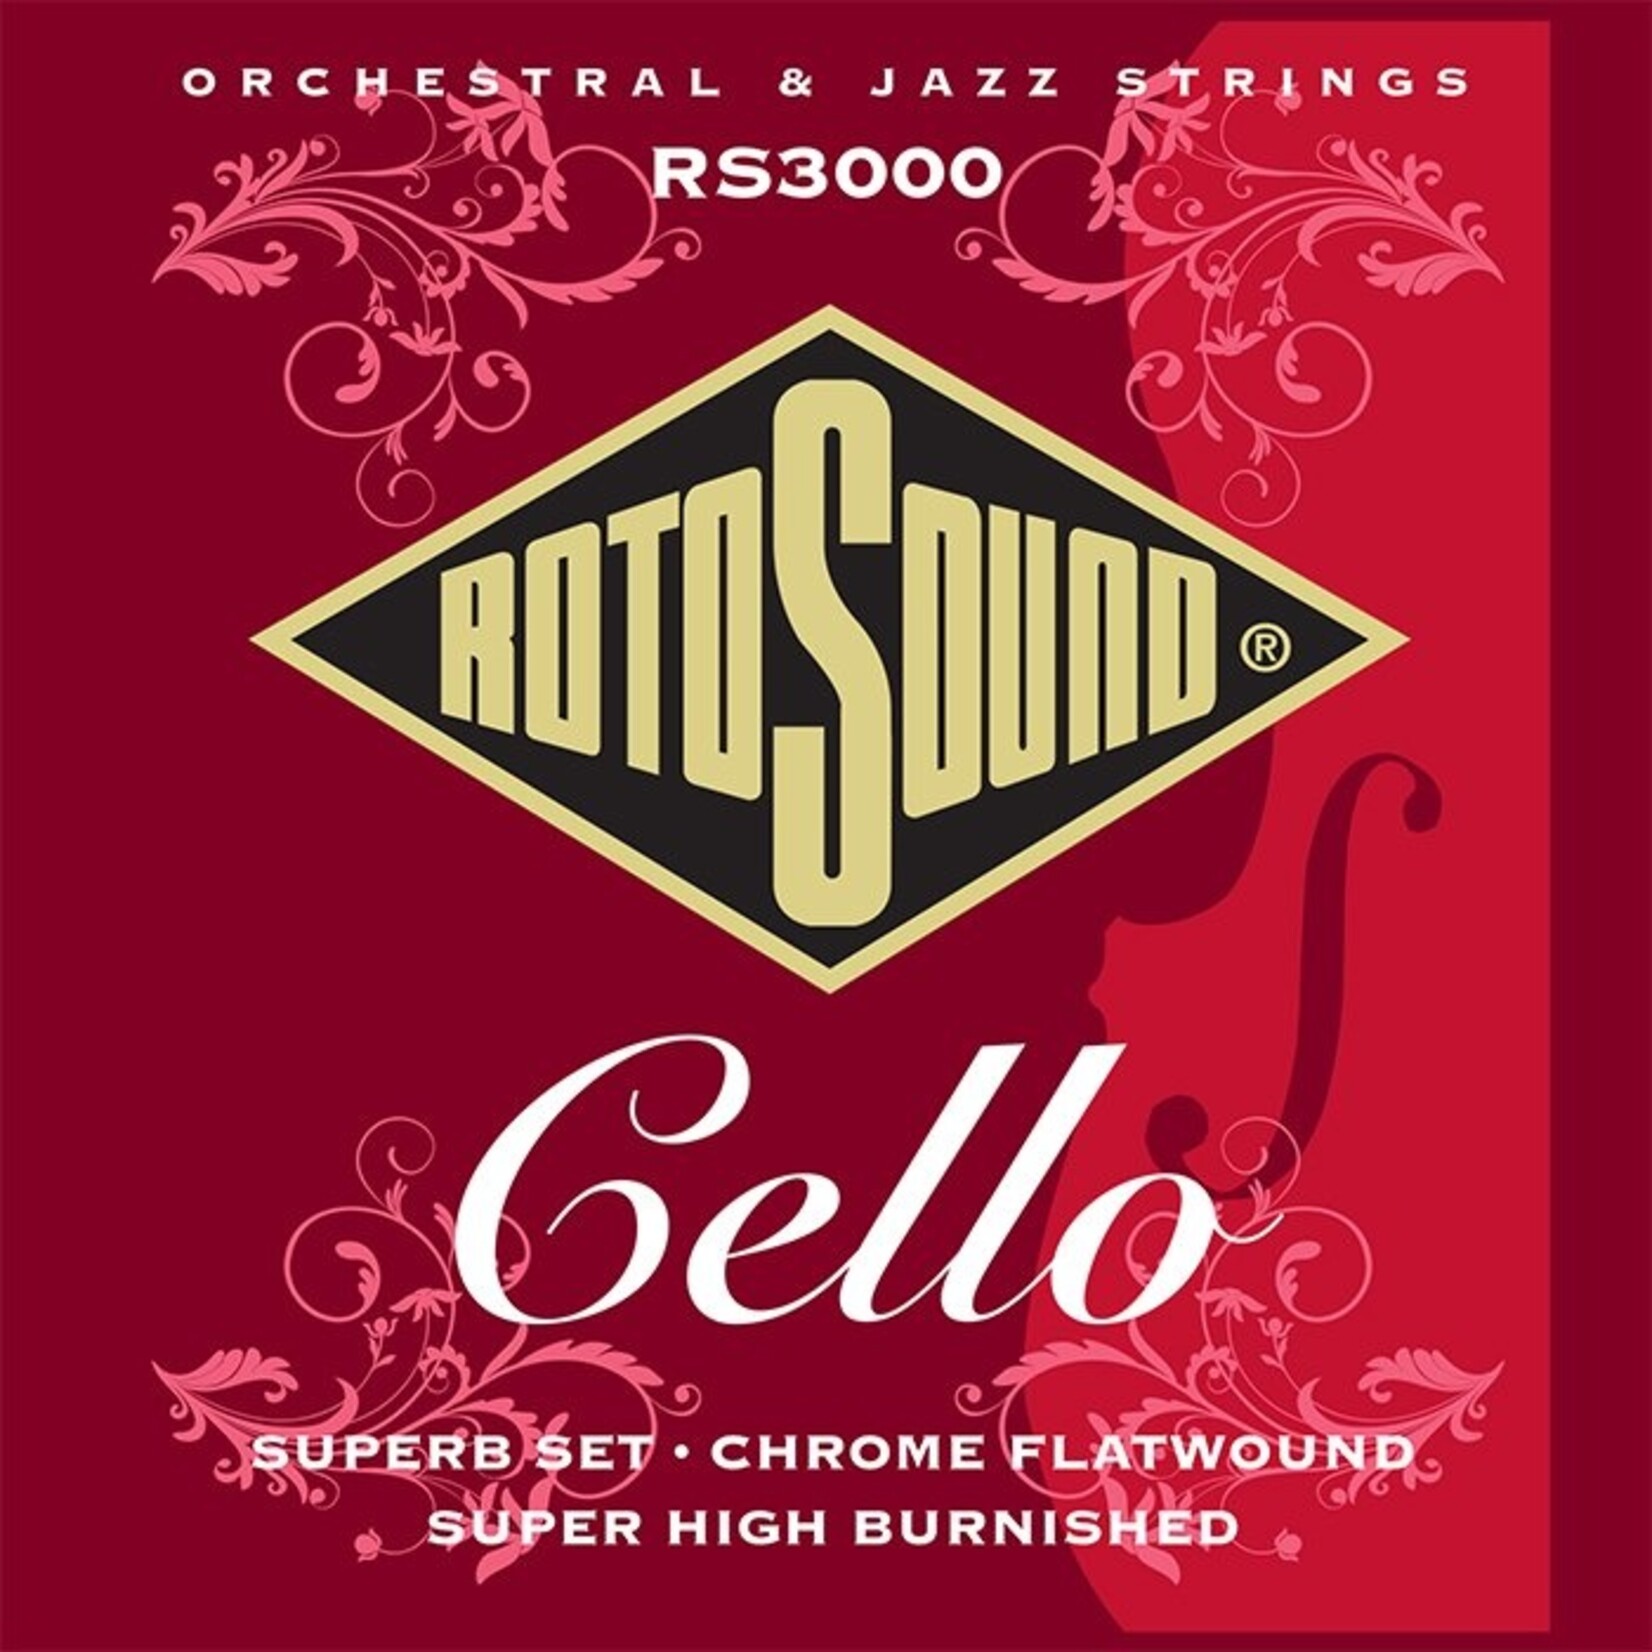 Rotosound RS3000 Superb Cello Strings